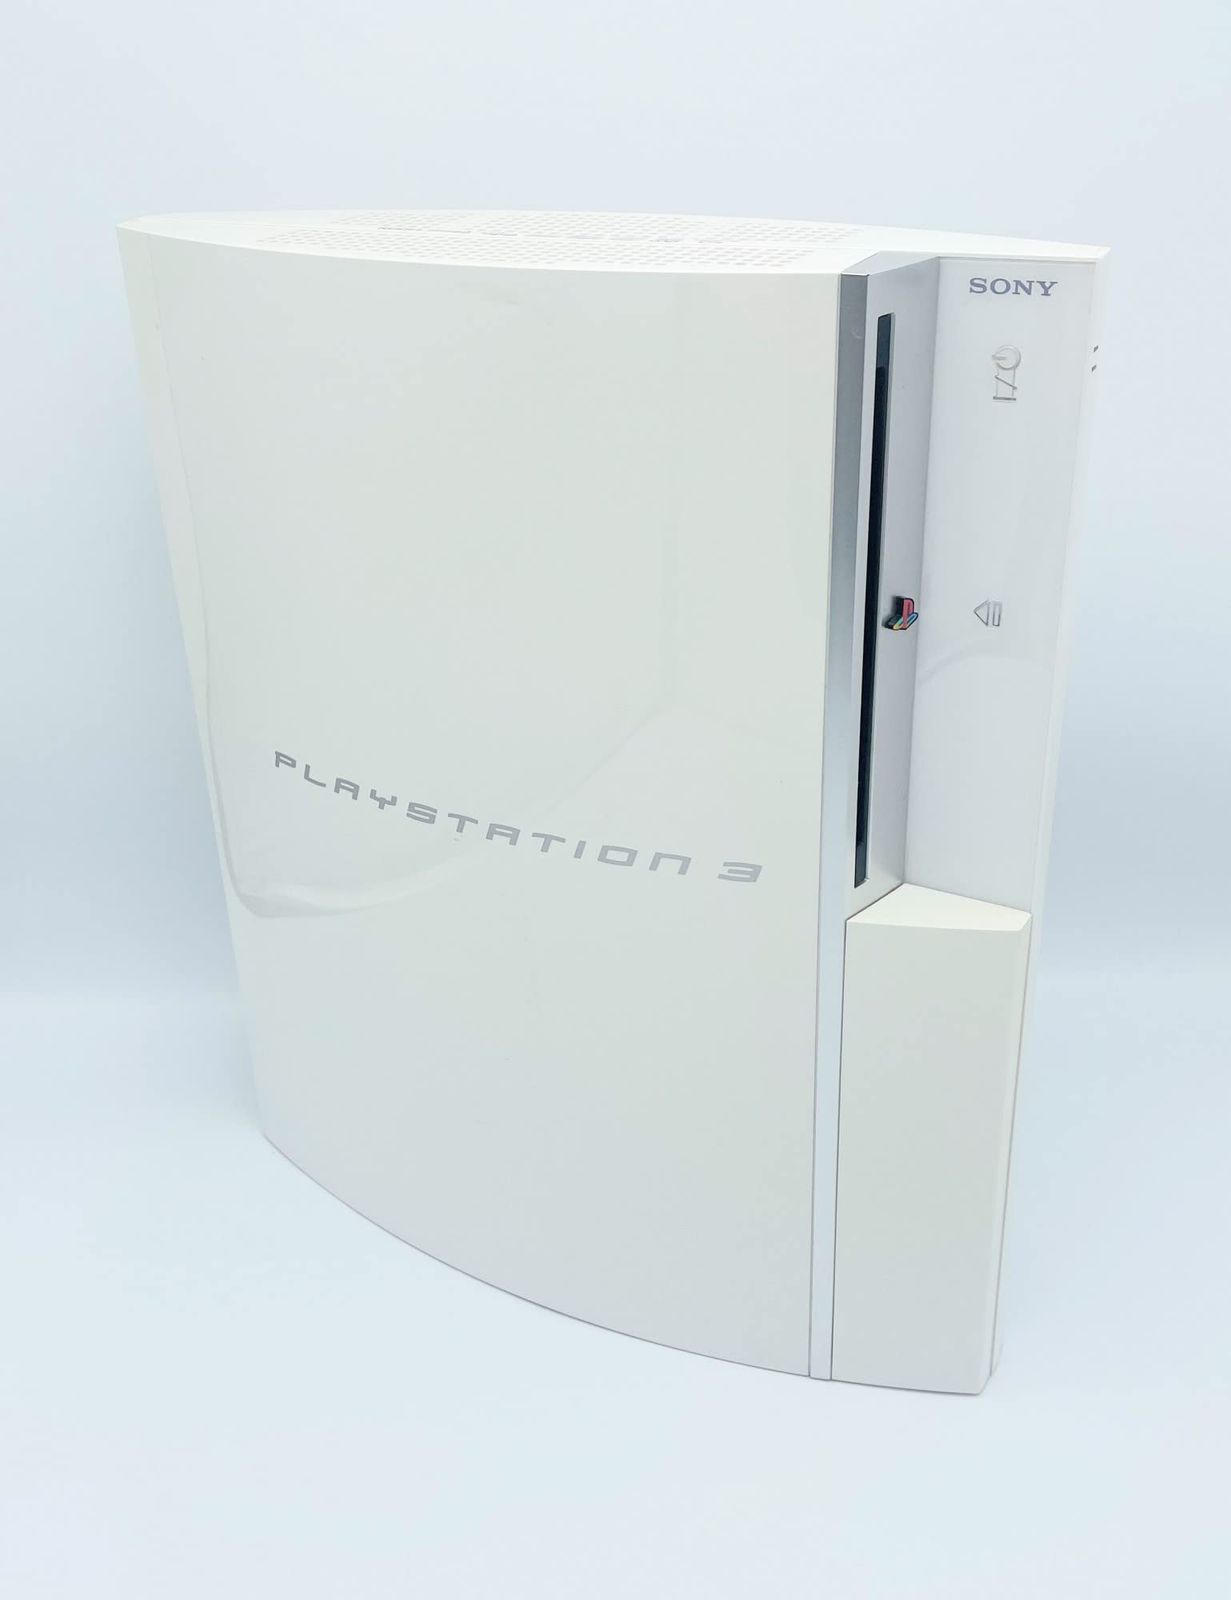 PLAYSTATION 3(40GB) セラミック・ホワイト【メーカー生産終了 